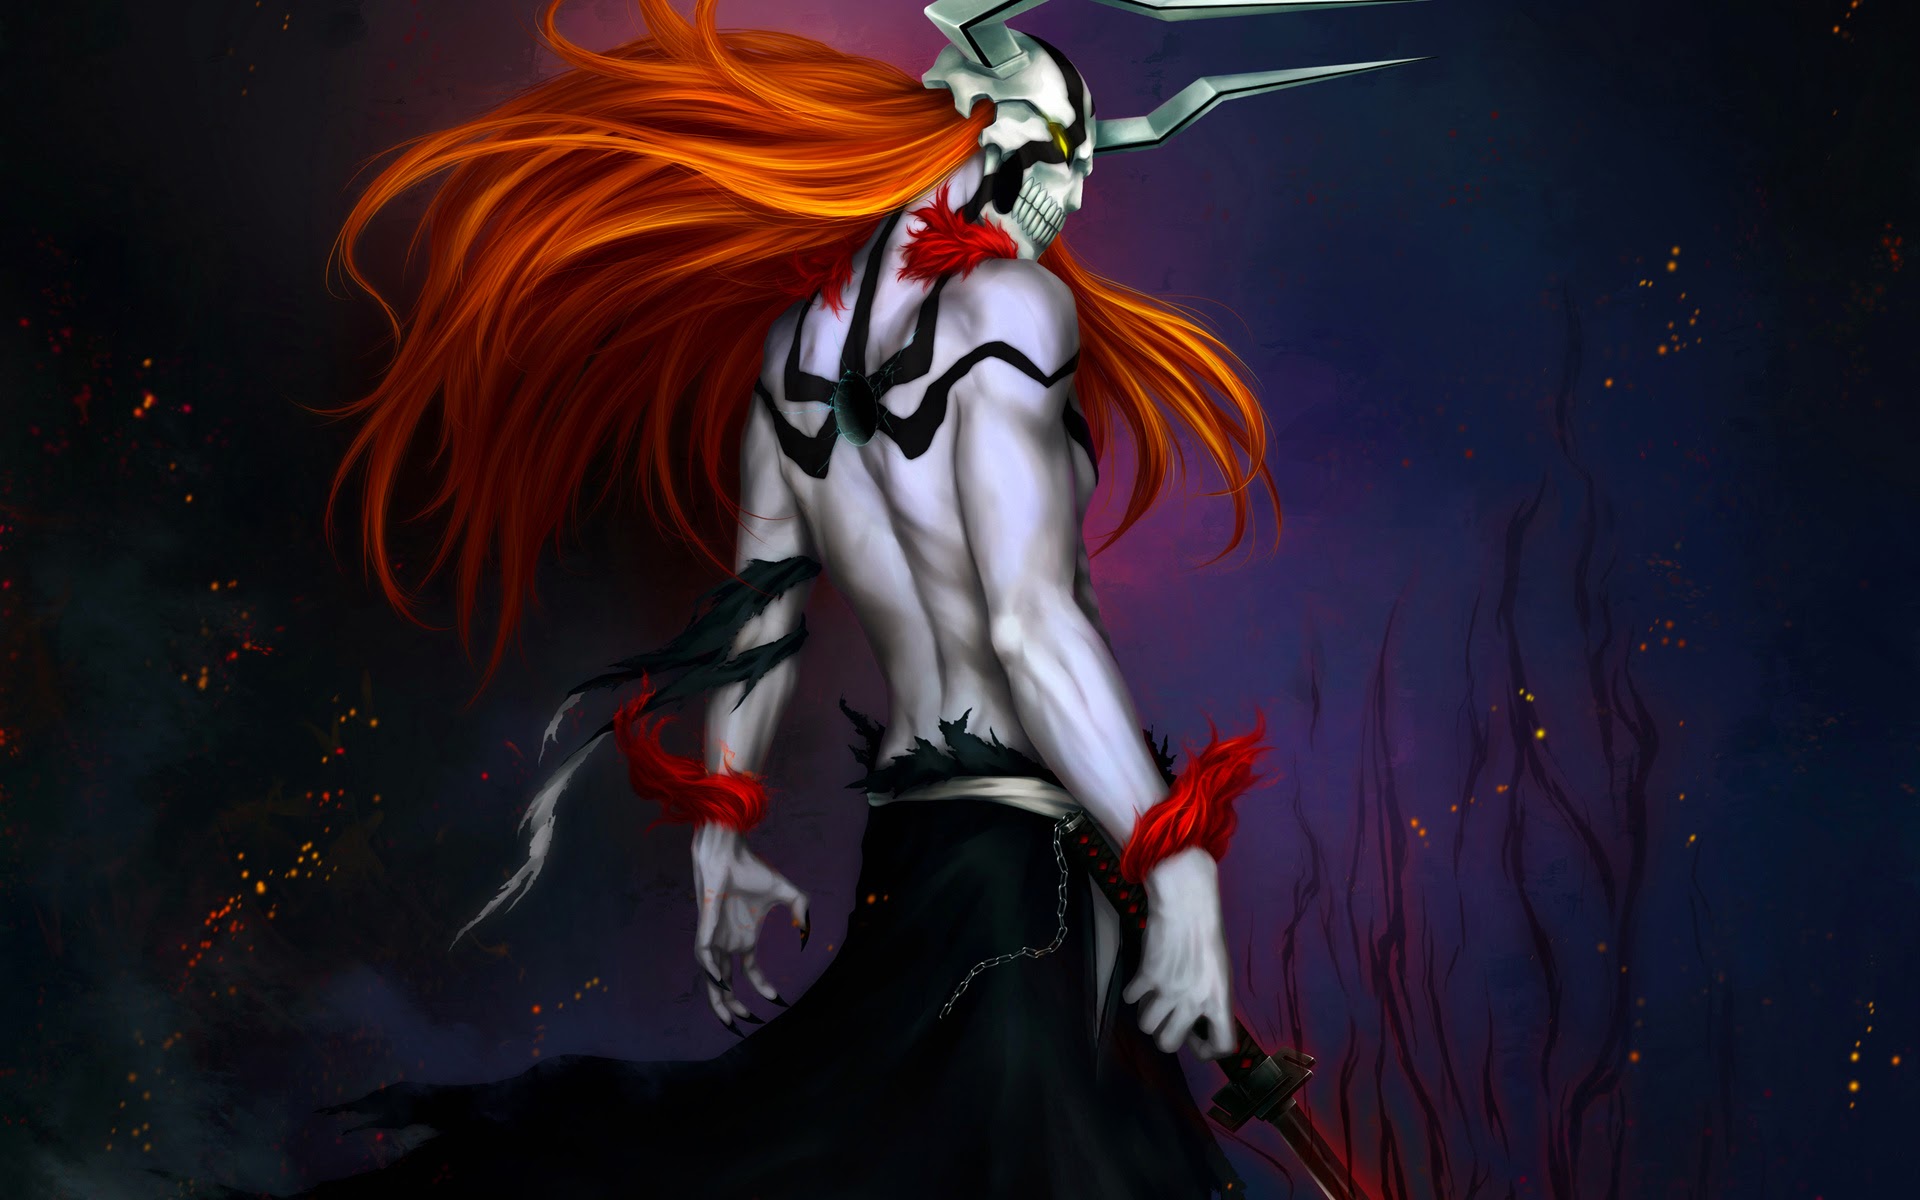 Vasto Lorde Ichigo - Bleach & Anime Background Wallpapers on Desktop Nexus  (Image 614267)